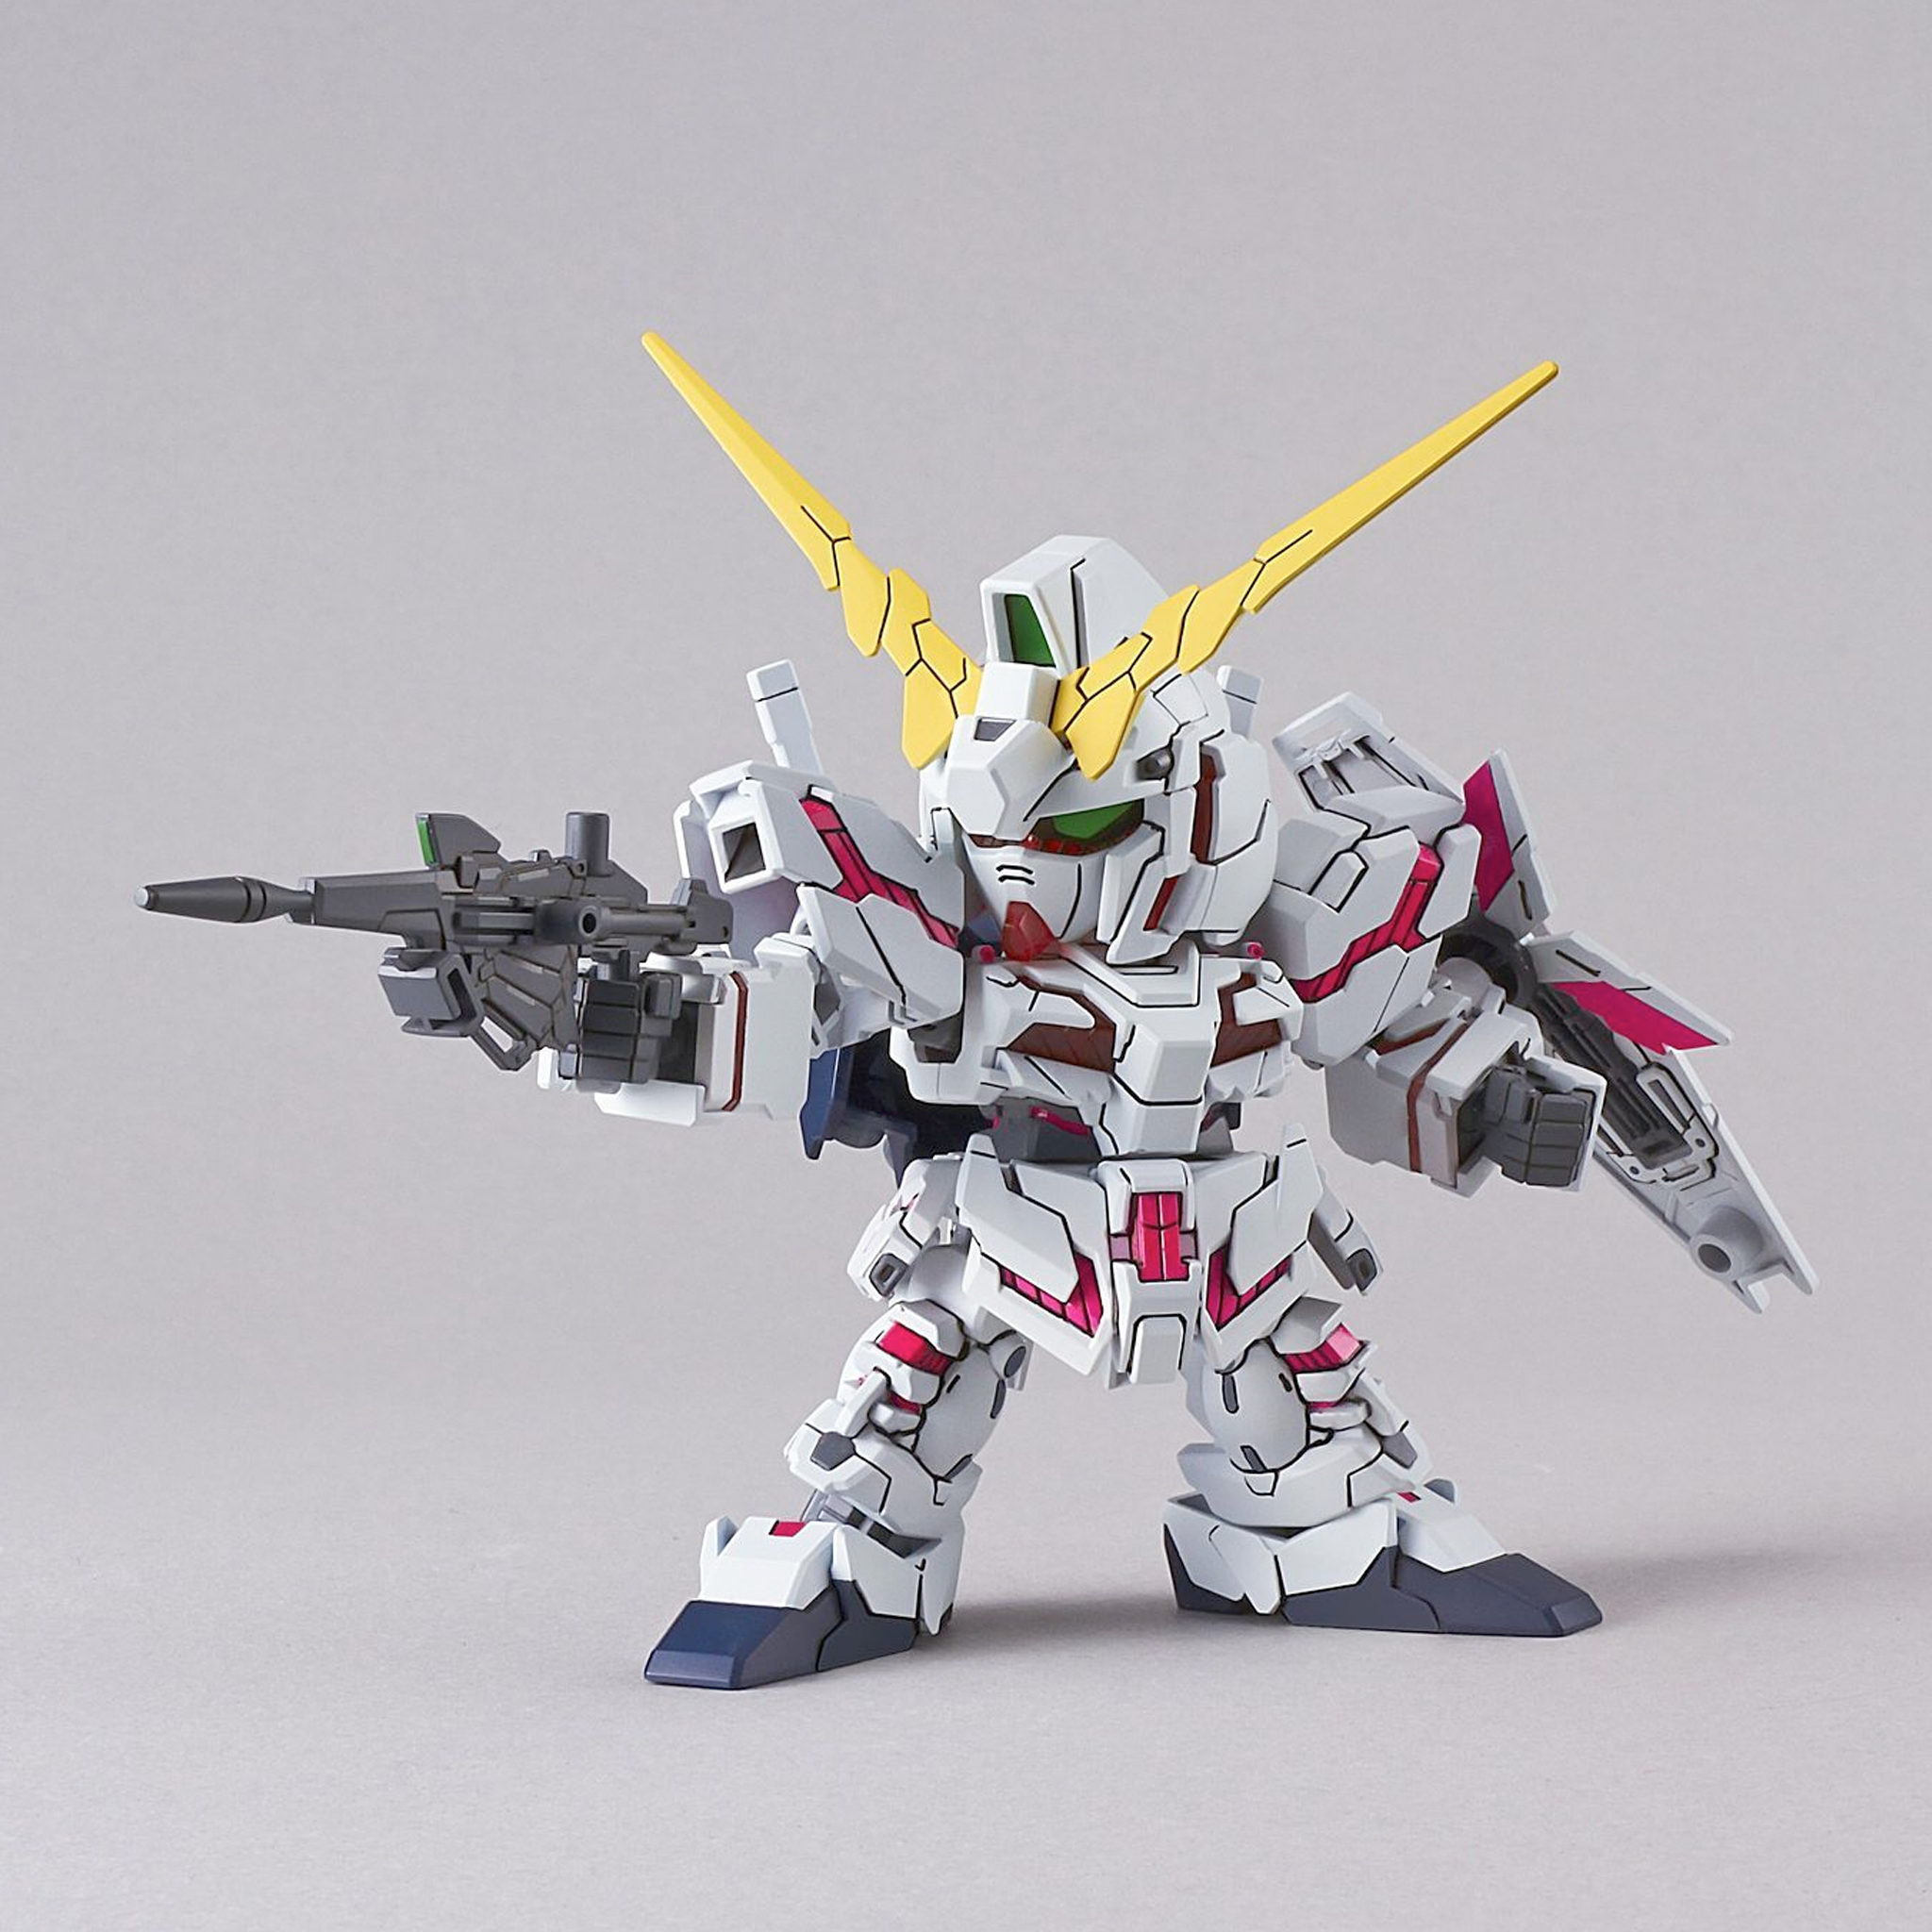 SD EX Unicorn Gundam (Destroy Mode)